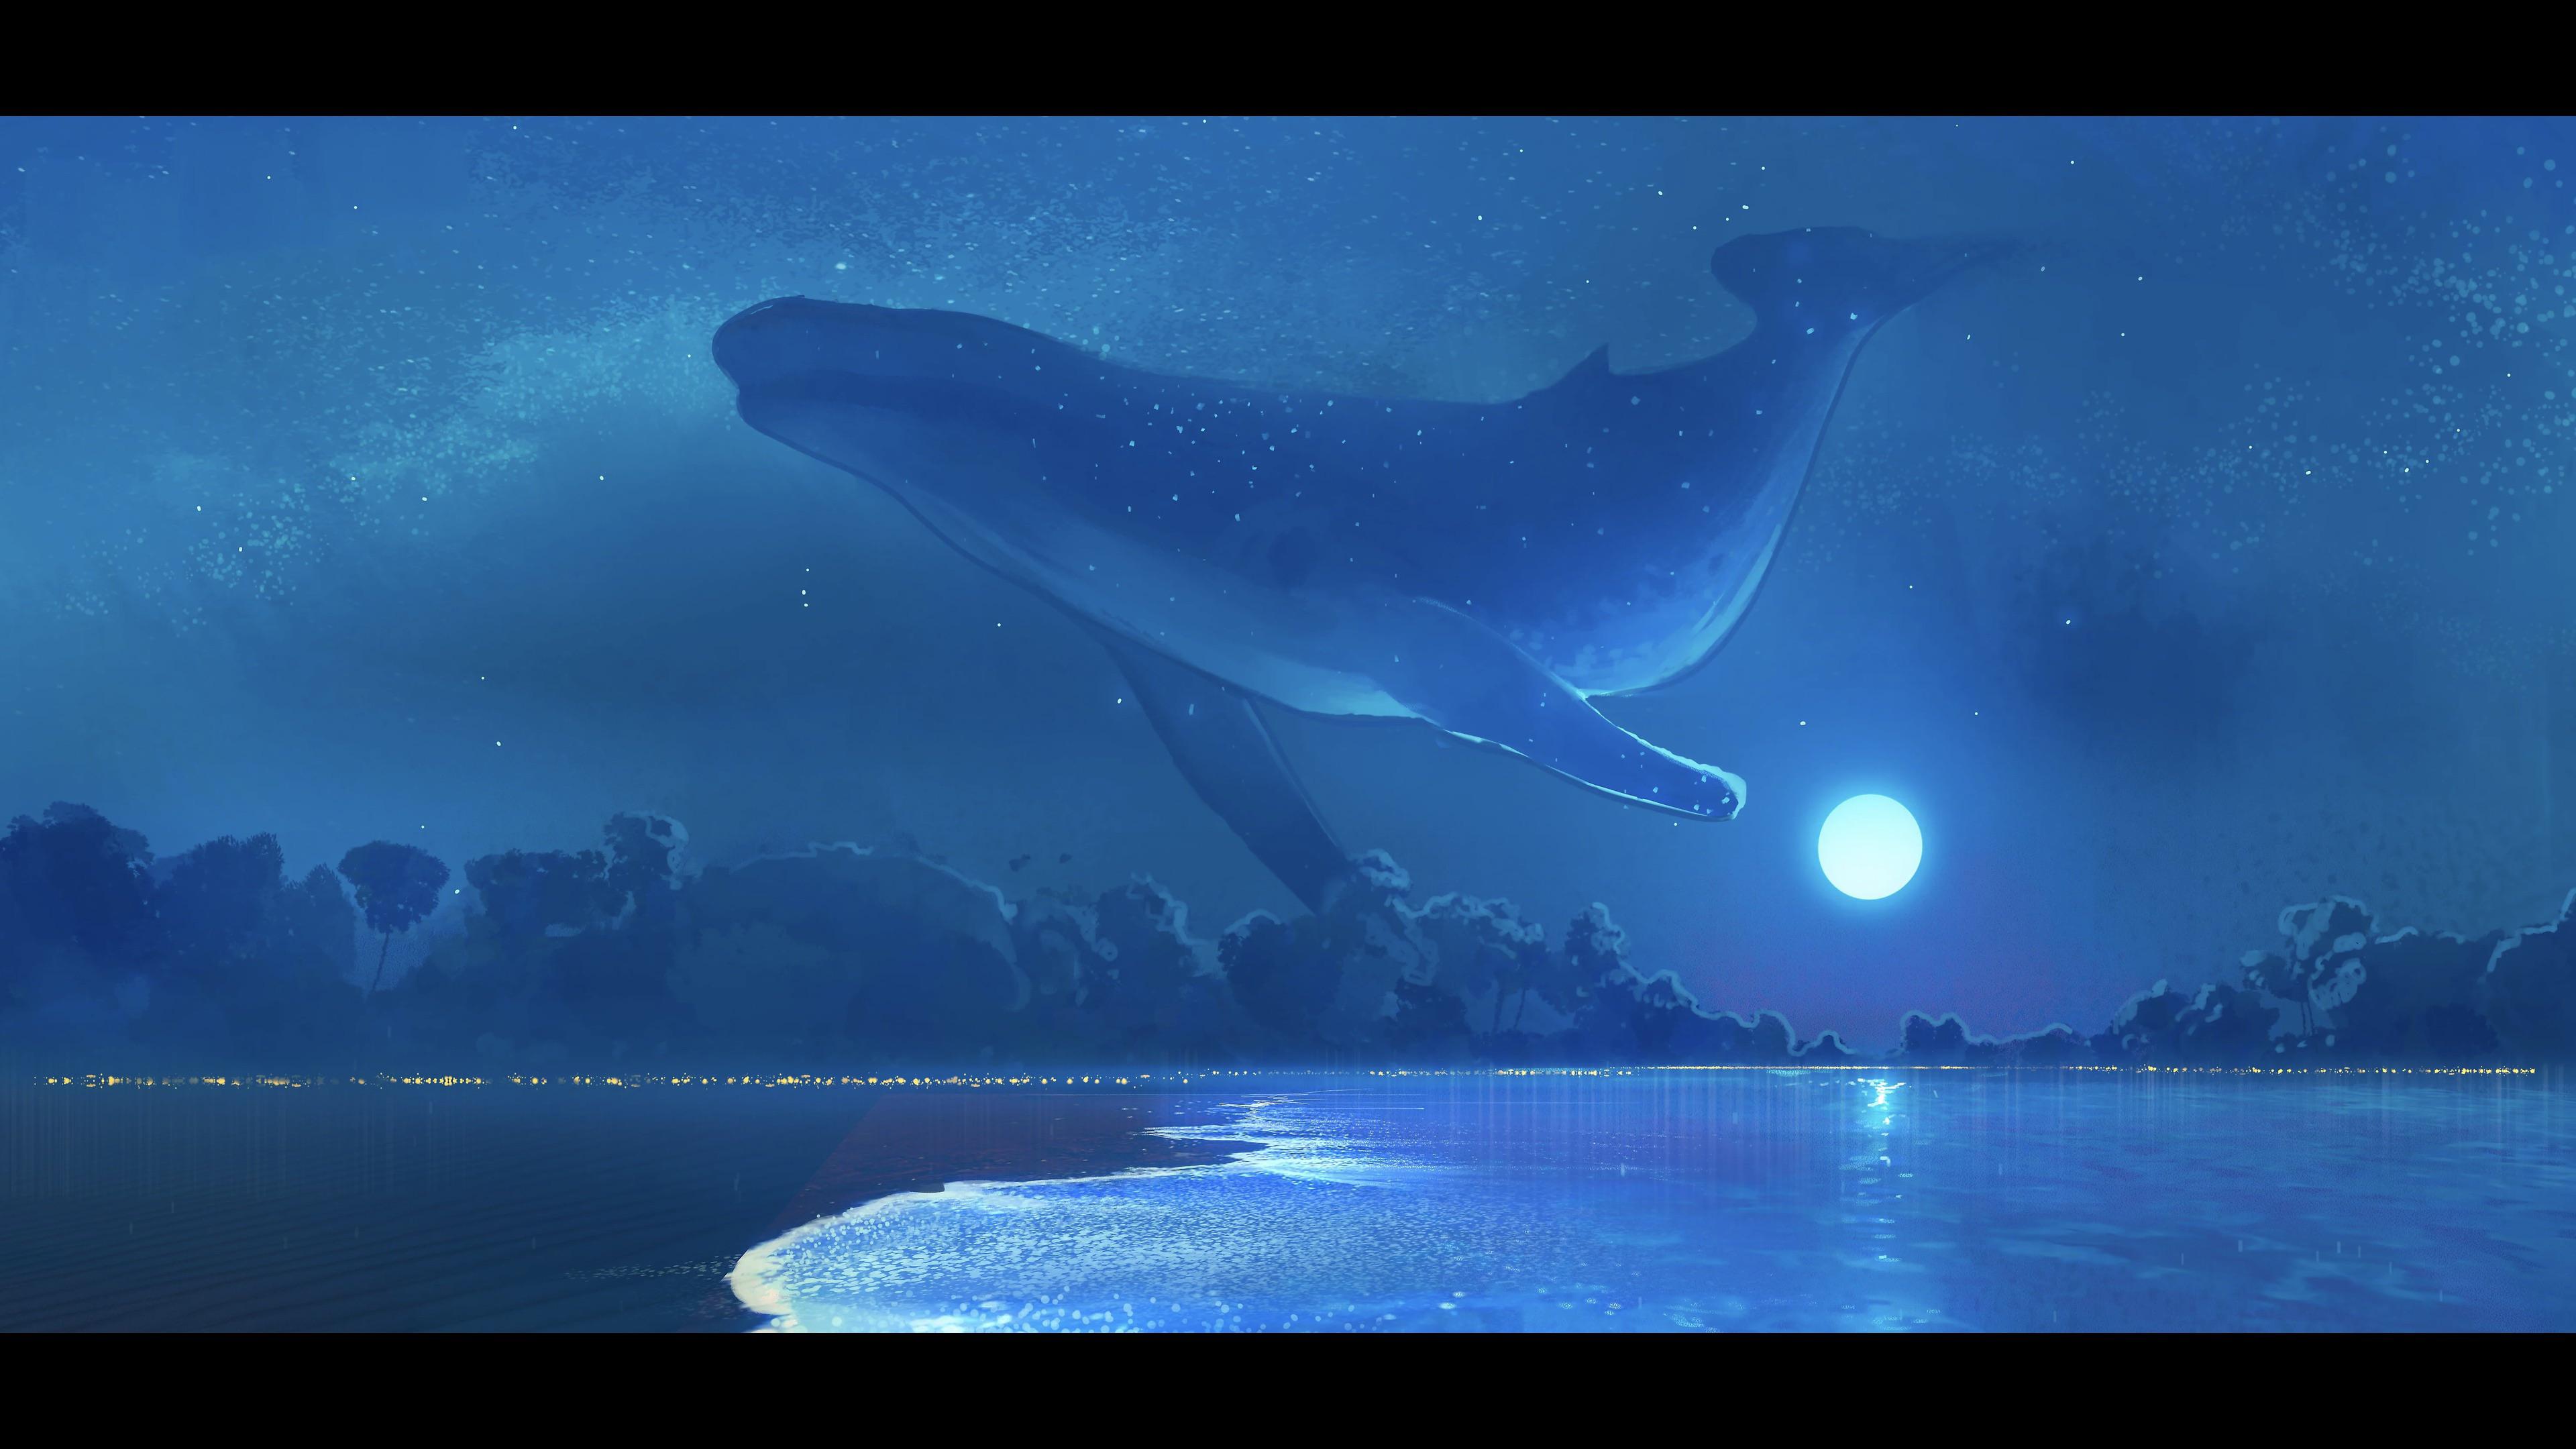 Underwater-live-wallpaper-with-whales(original) by NightcoreGang on  DeviantArt